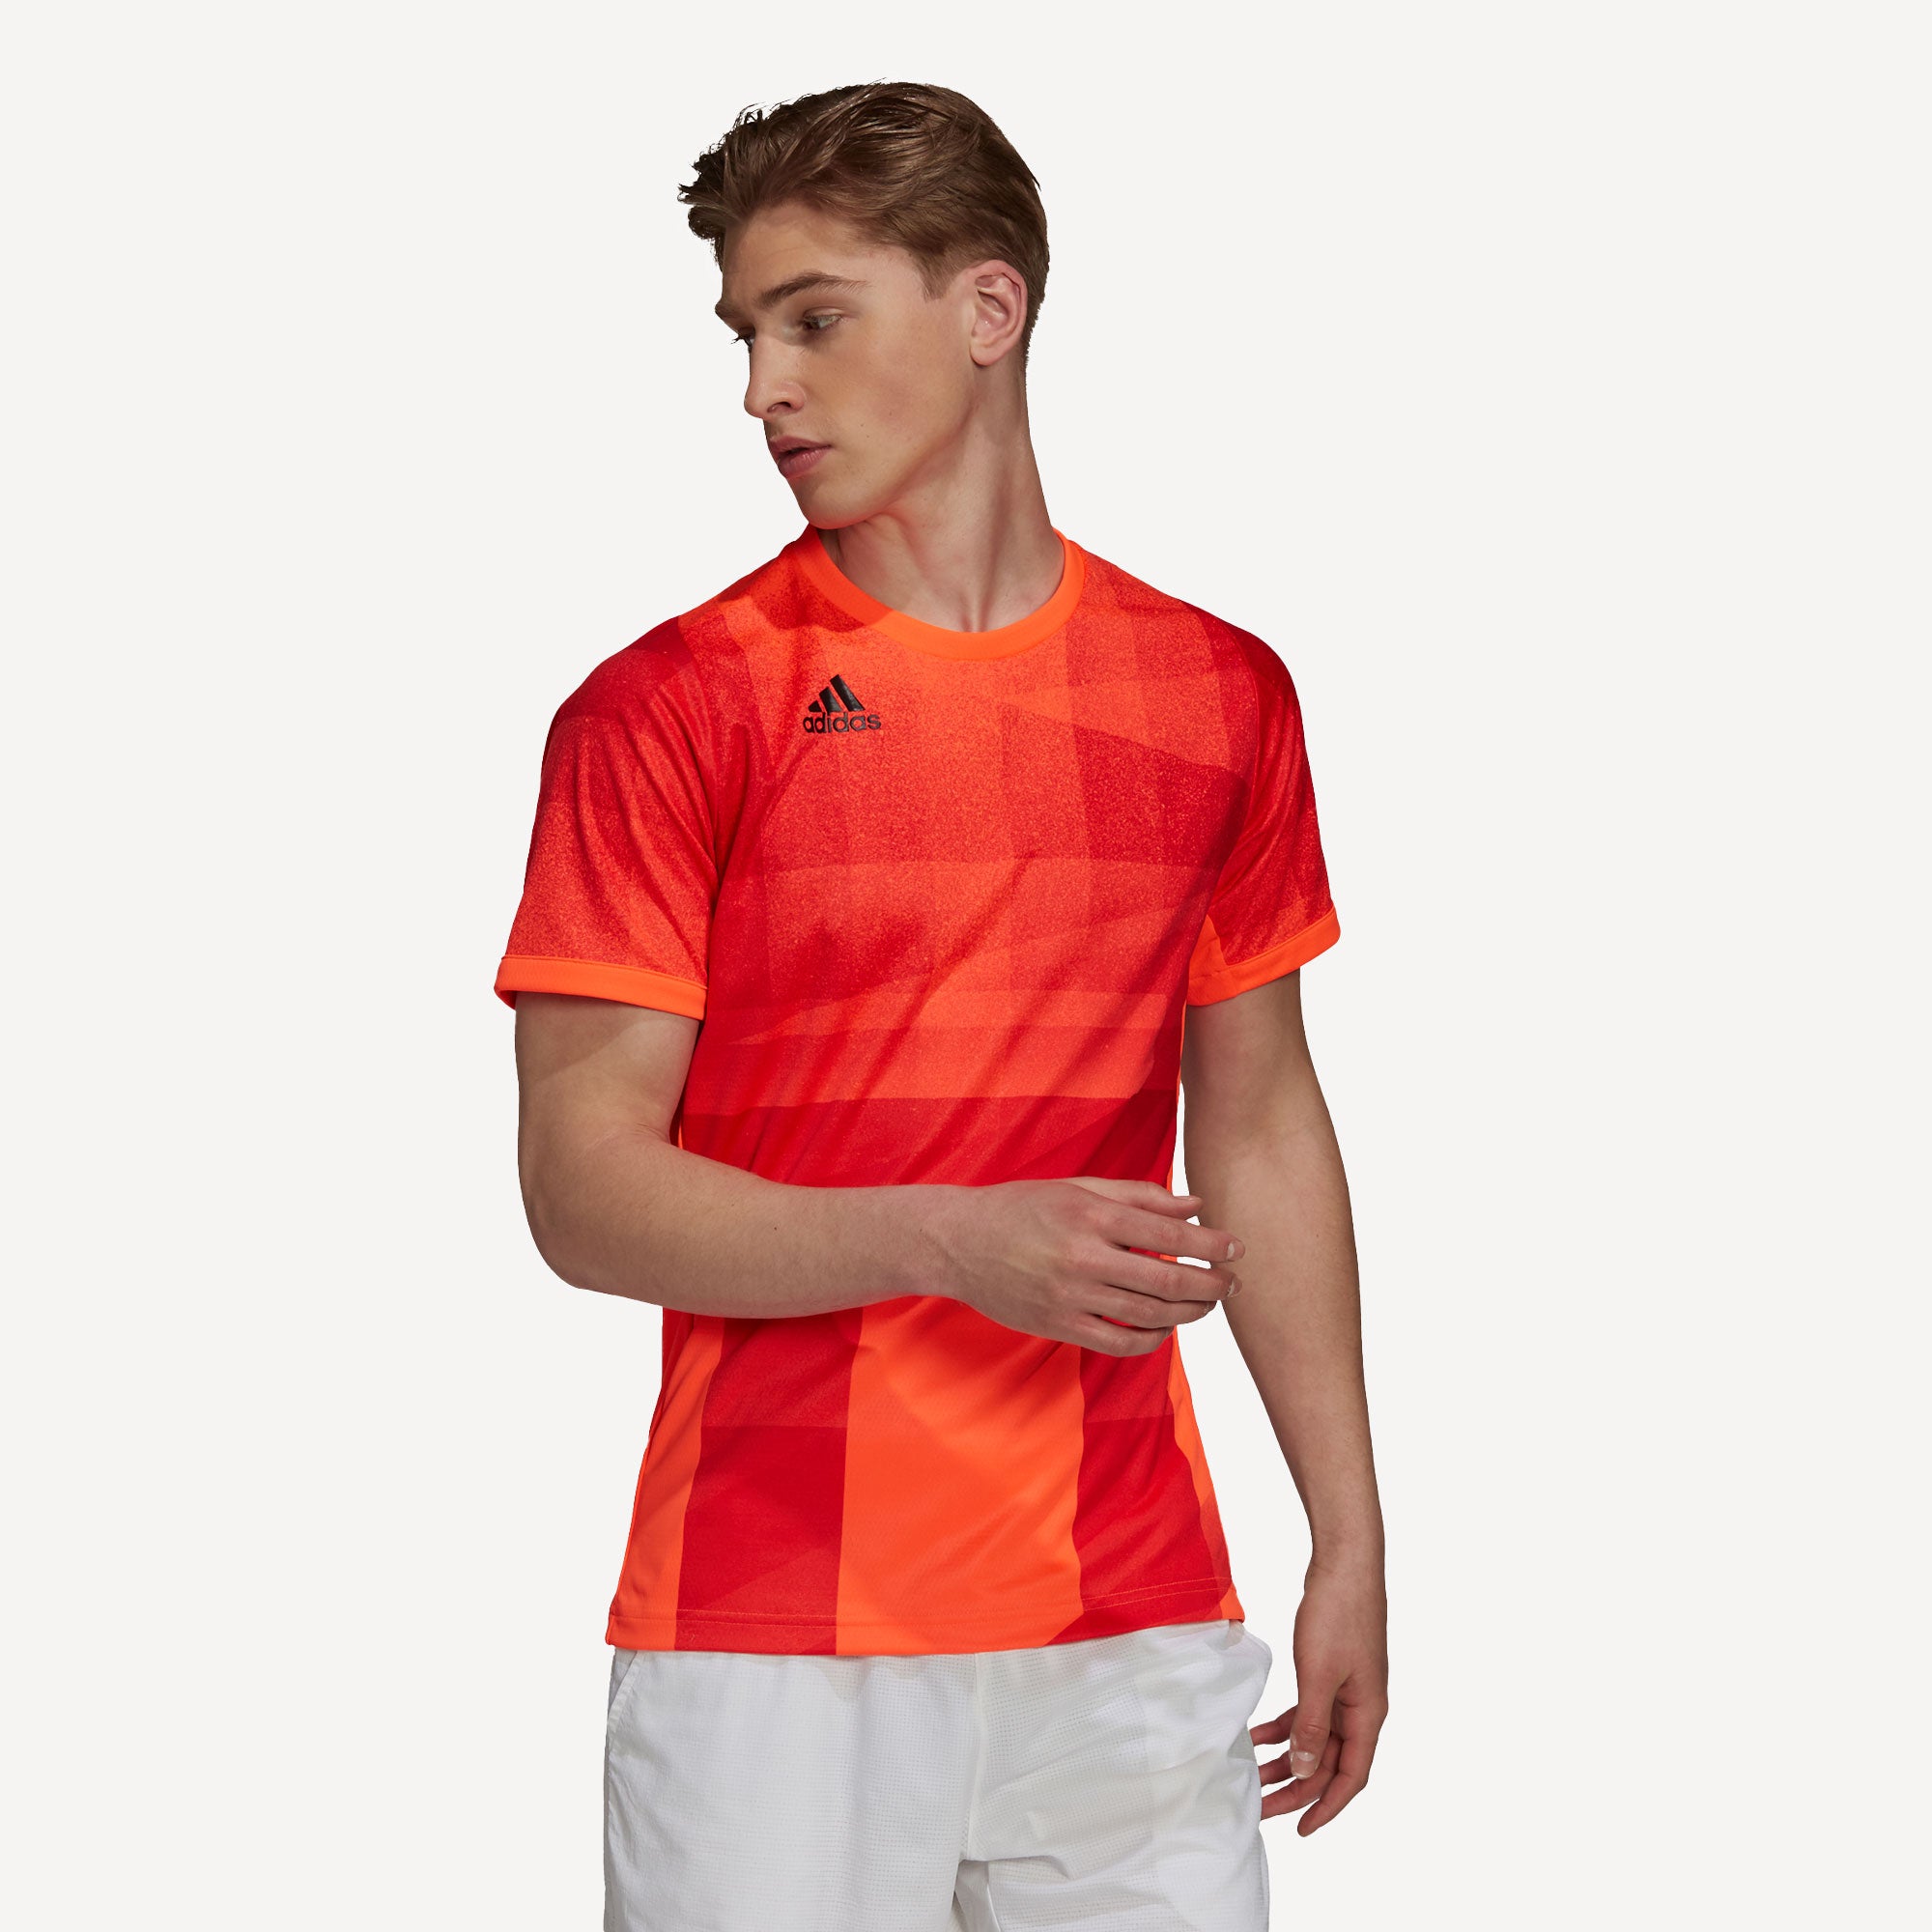 adidas Freelift Tokyo Primeblue Heat Ready Men's Tennis Shirt Red(1)